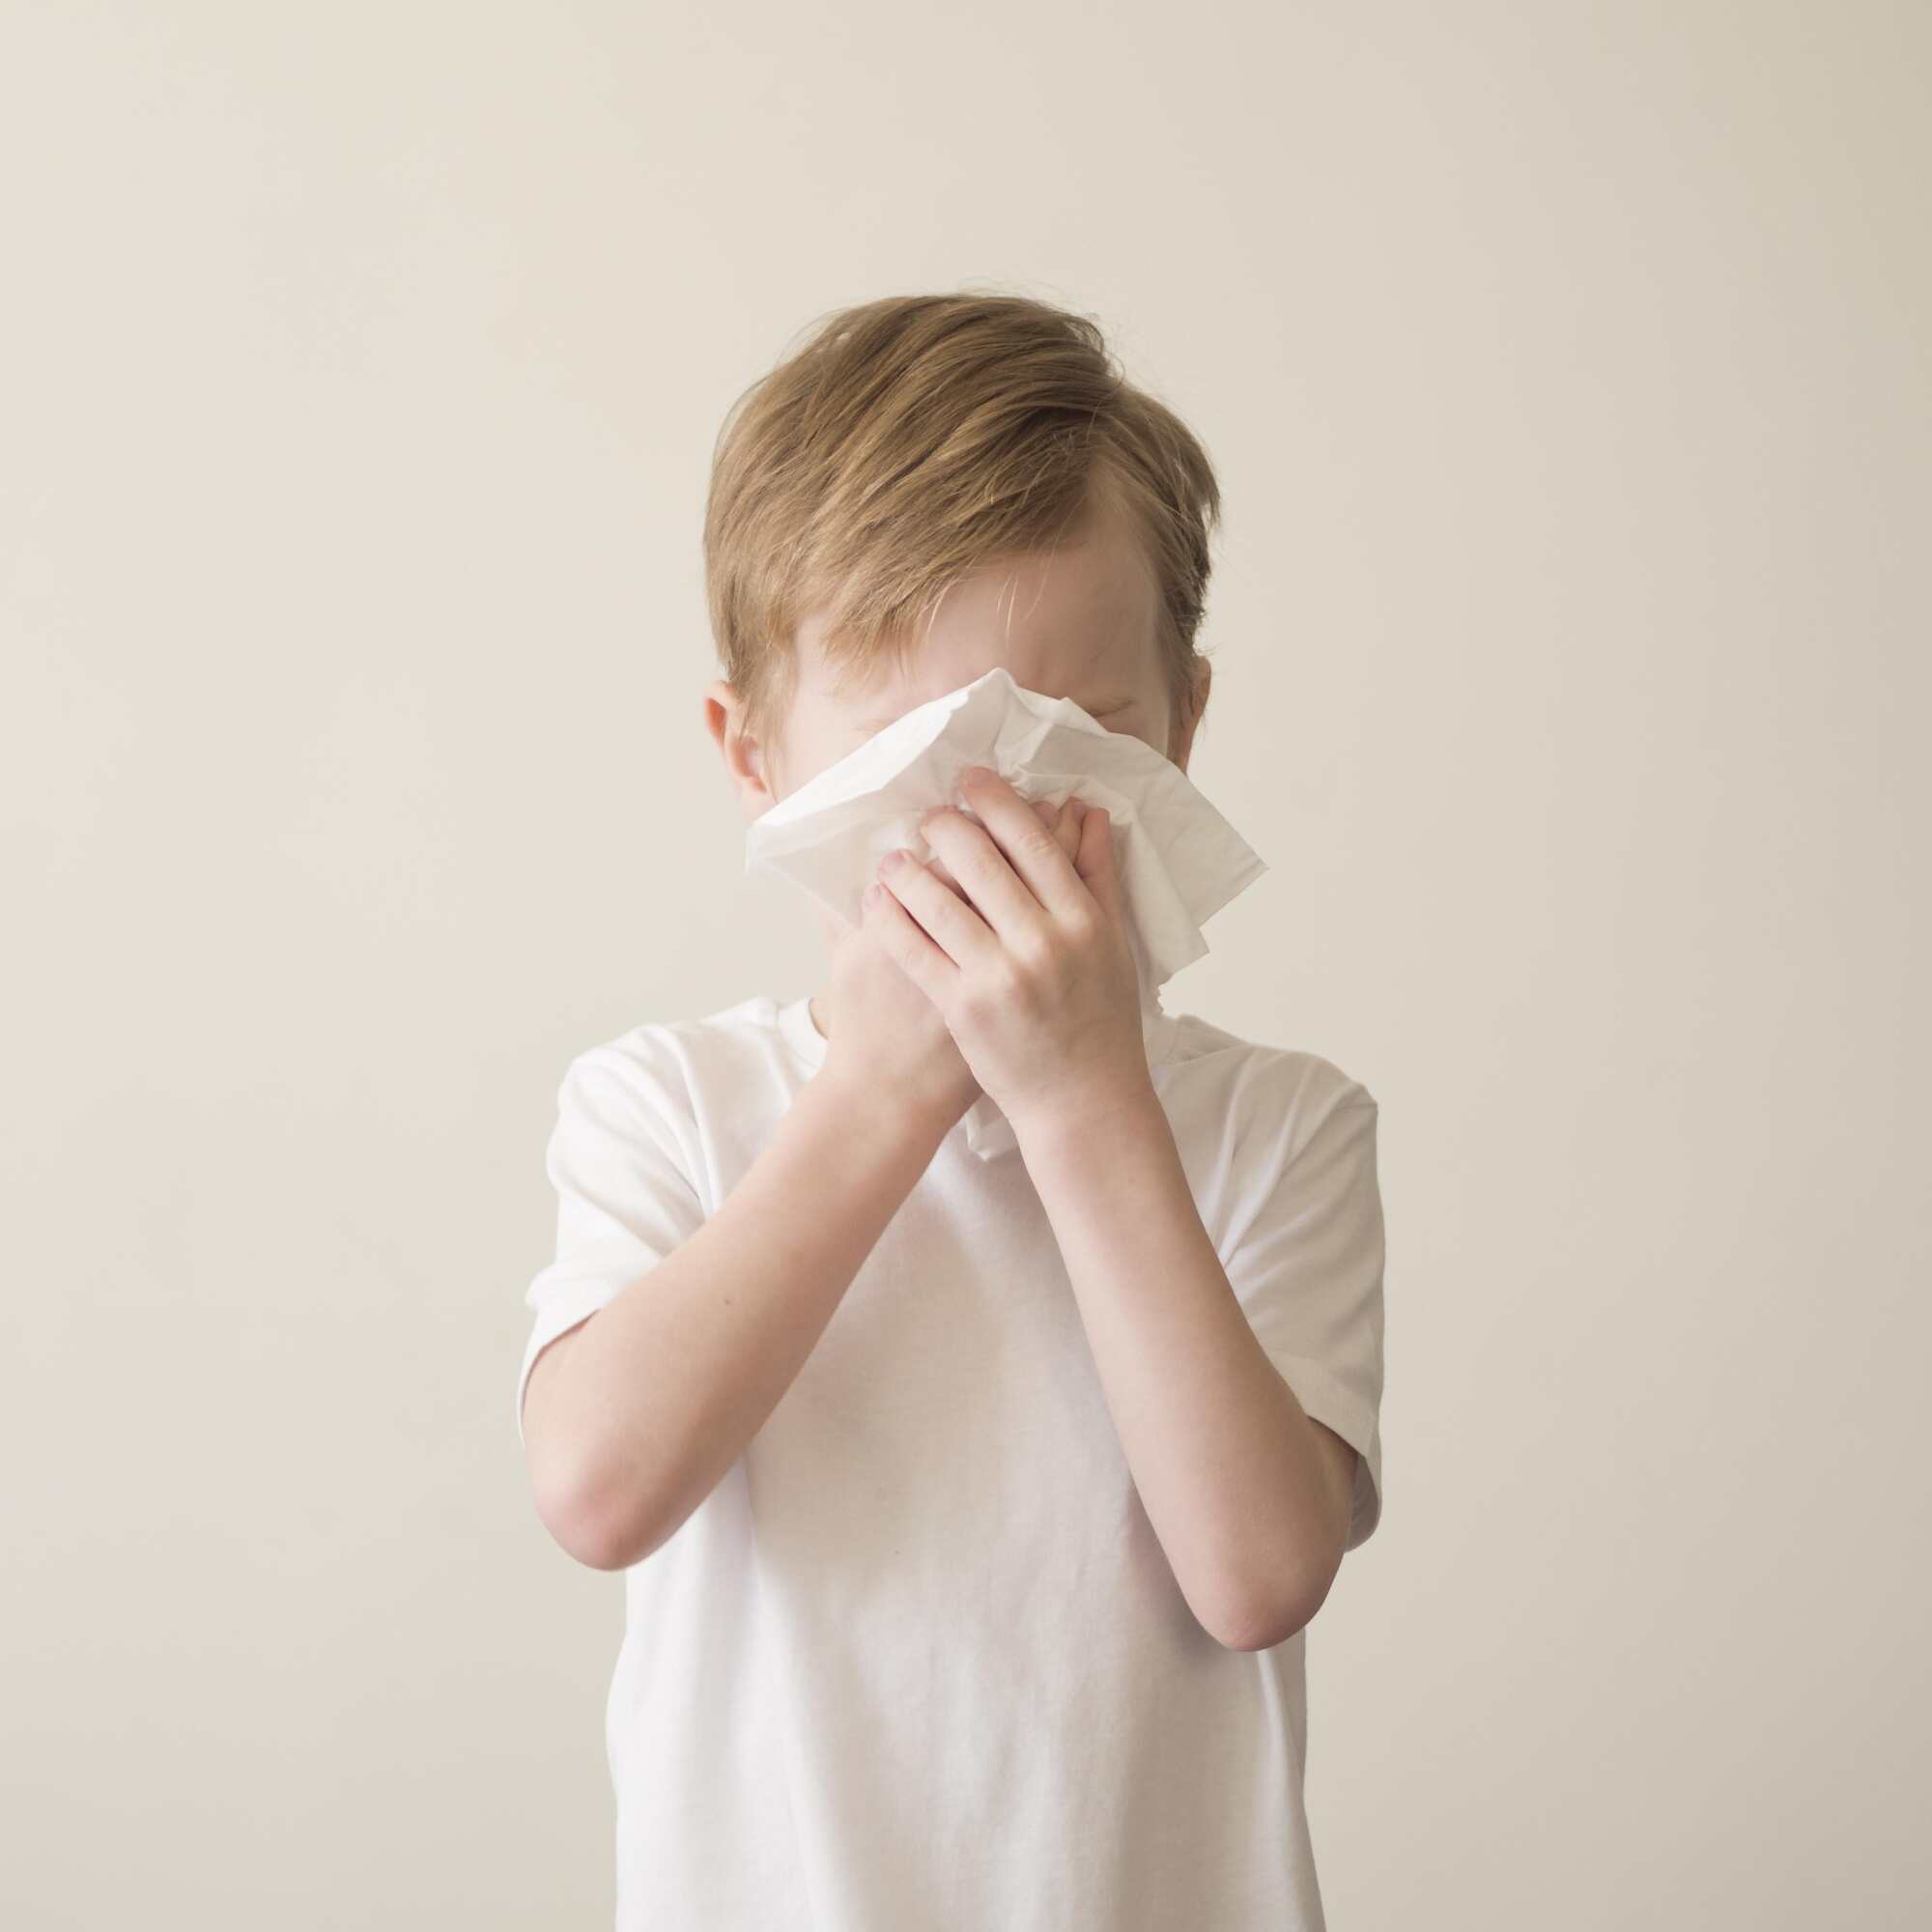 Common Childhood Allergies